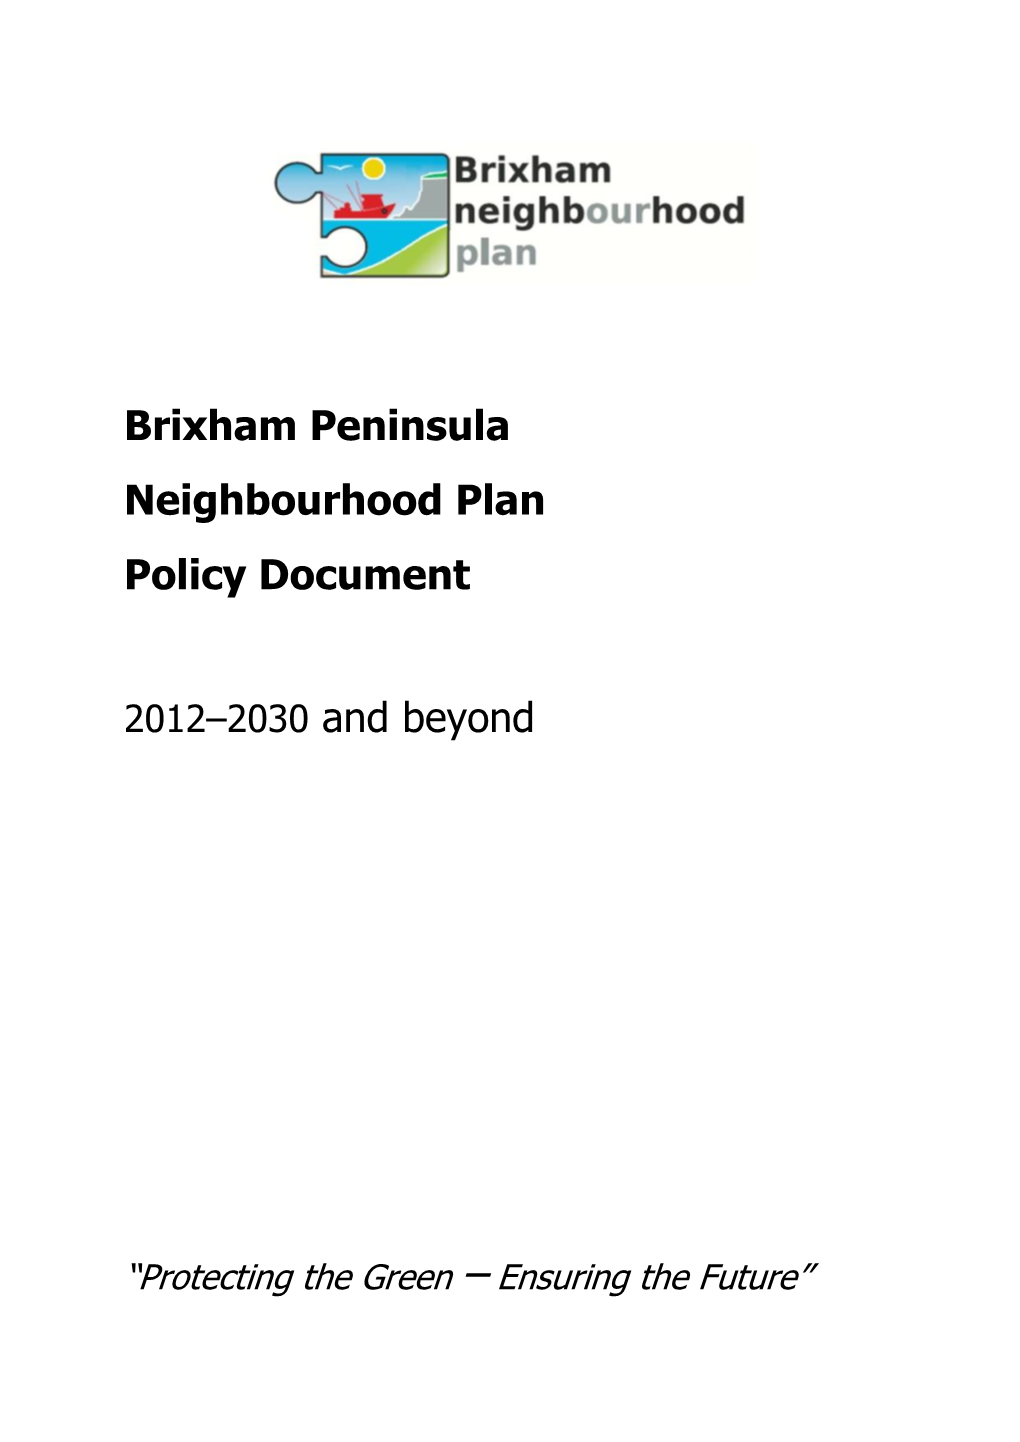 Brixham Peninsula Neighbourhood Plan Policy Document